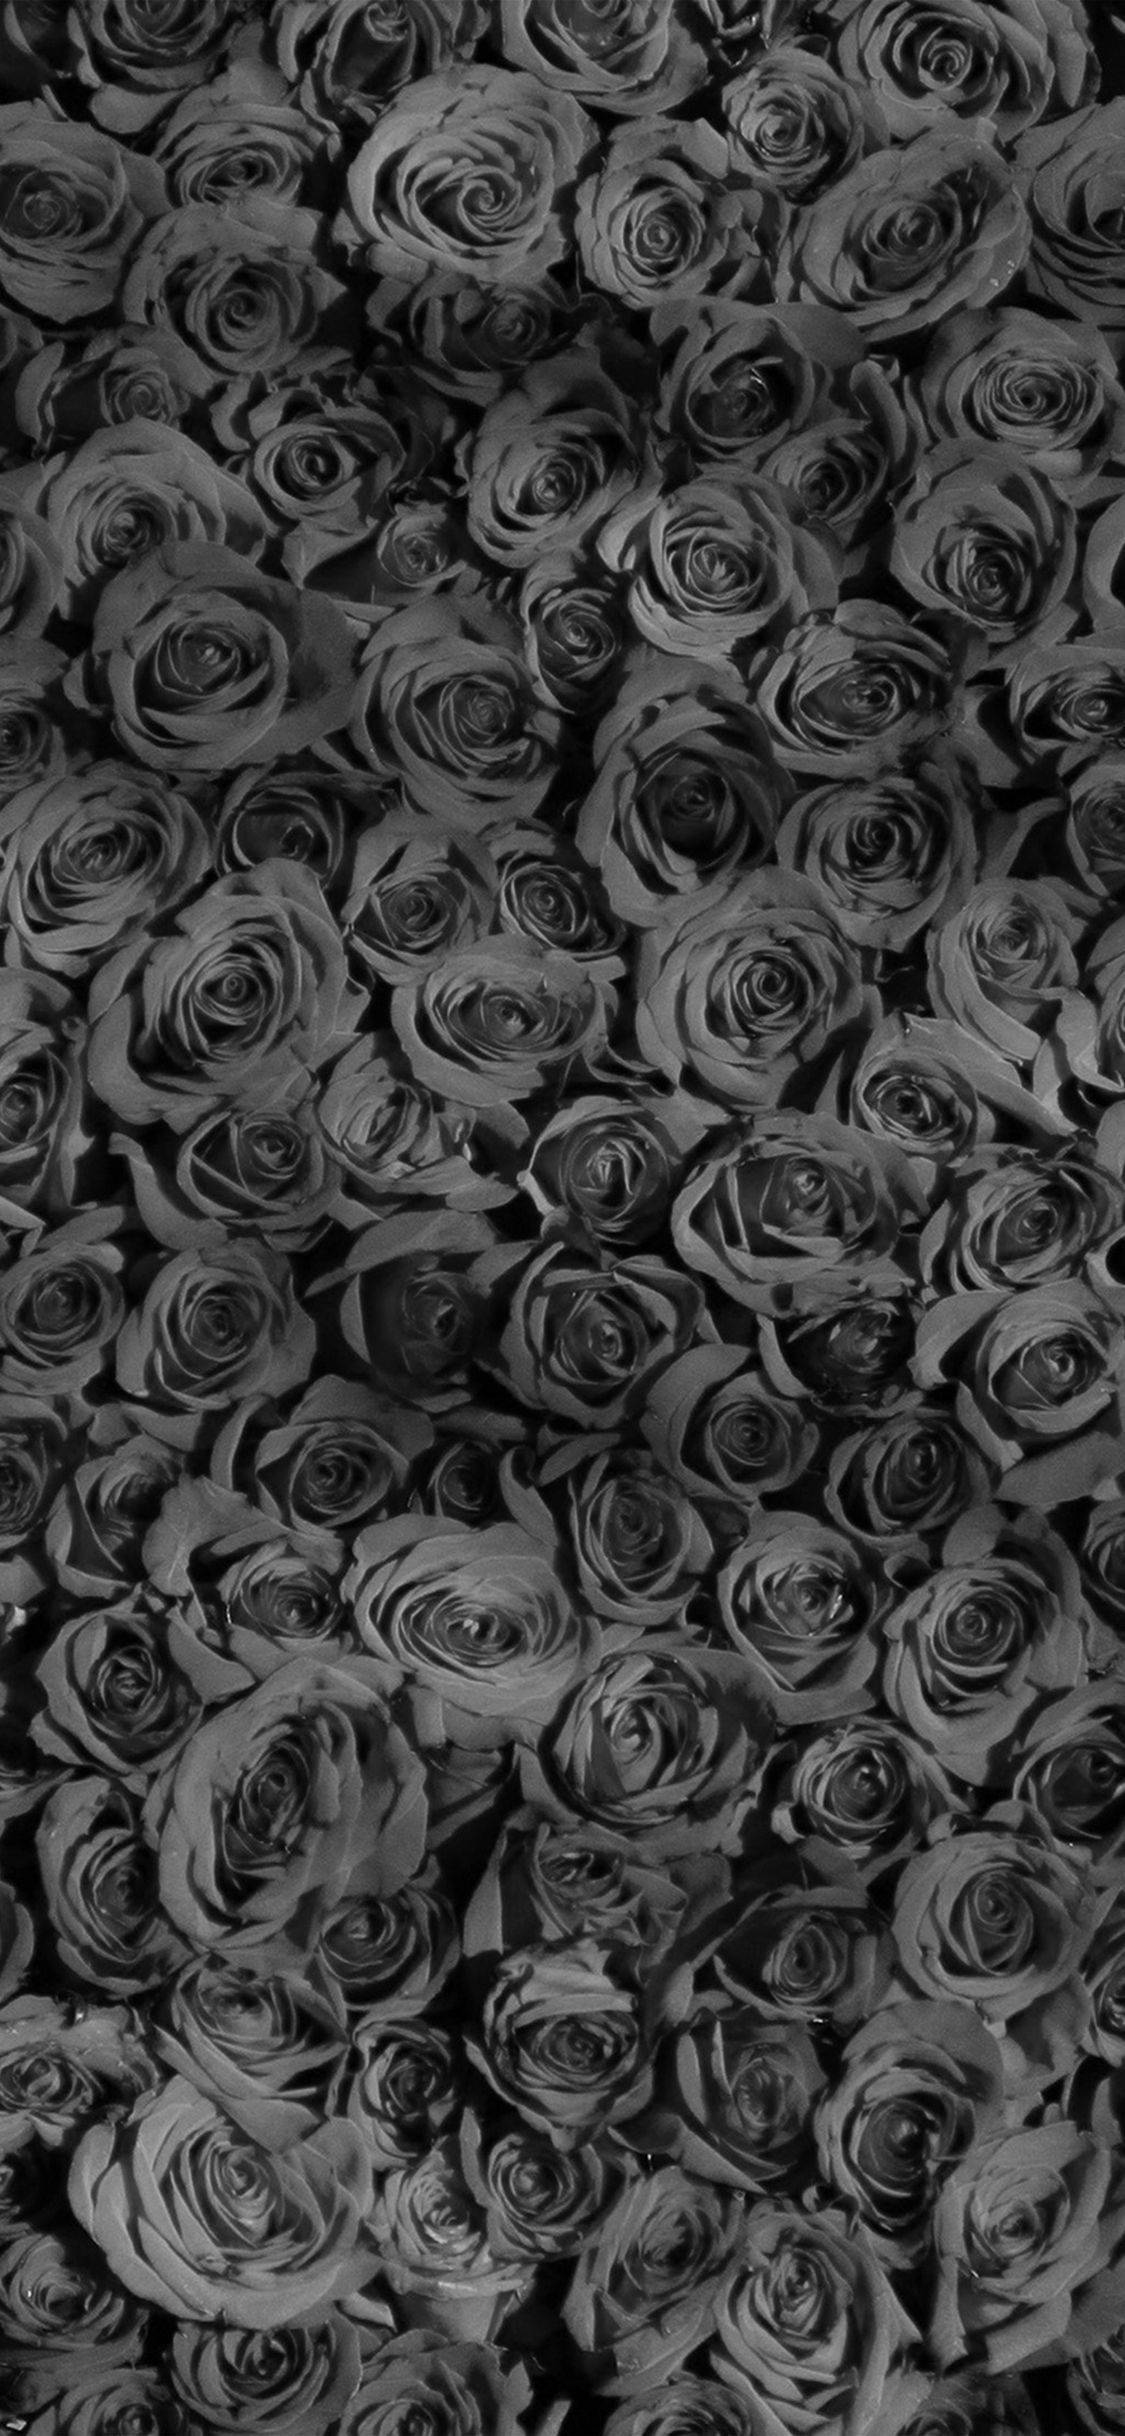 Stunning Wall Of Black Rose Iphone